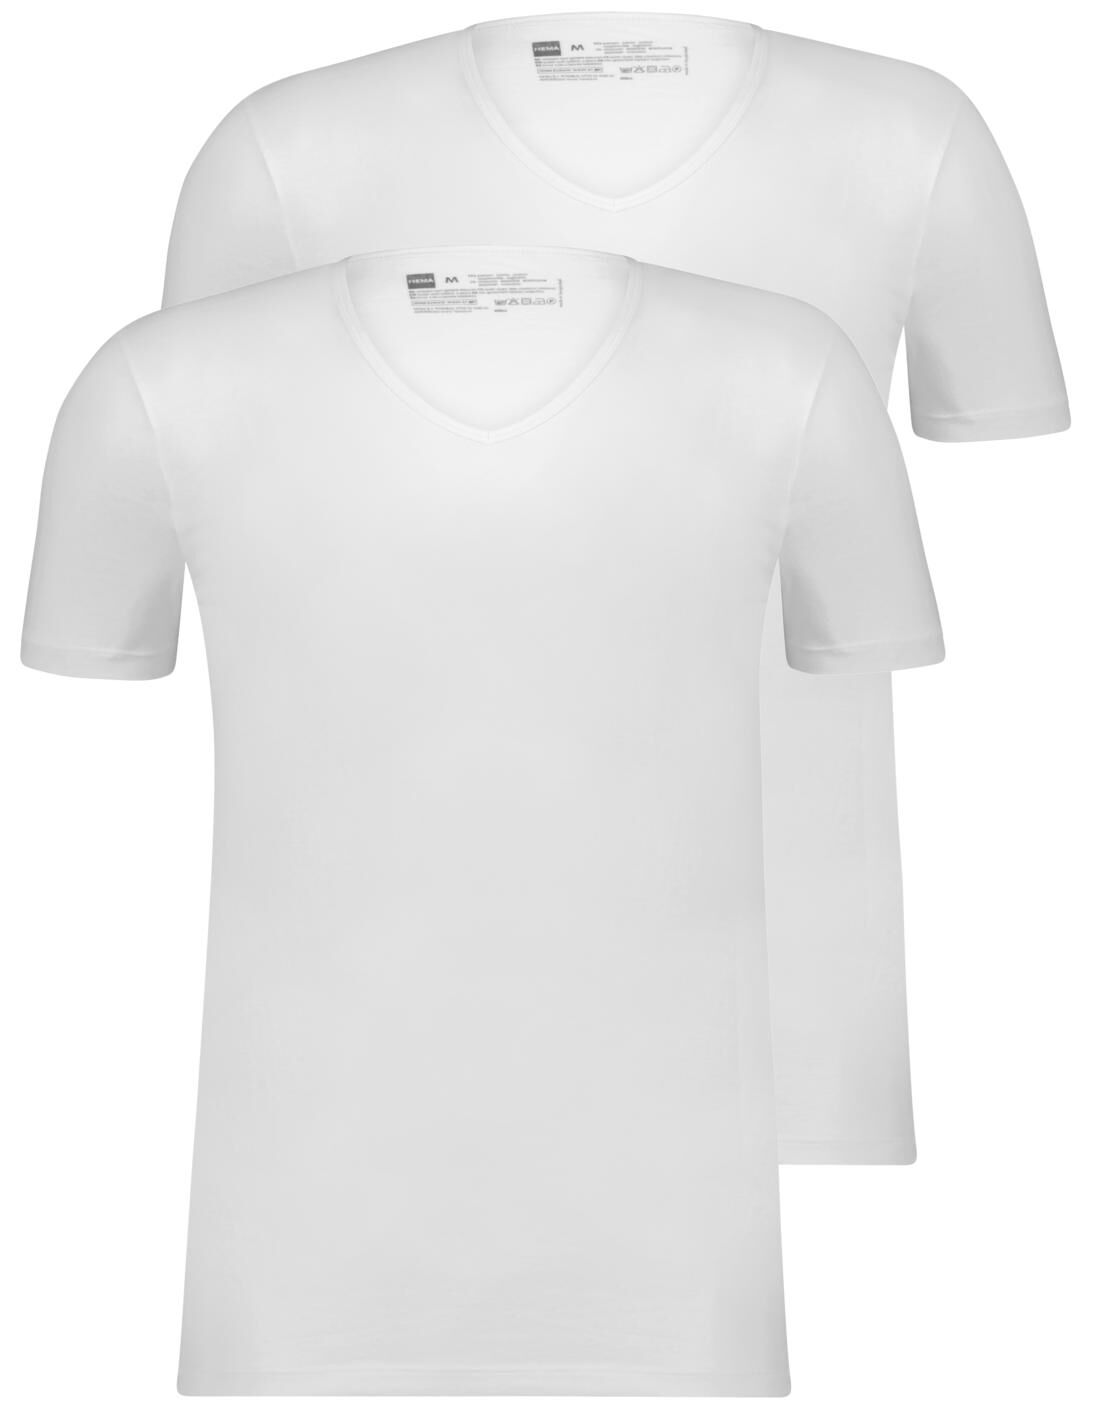 Wissmach V-hals shirt bruin-wit prints met een thema casual uitstraling Mode Shirts V-hals shirts 